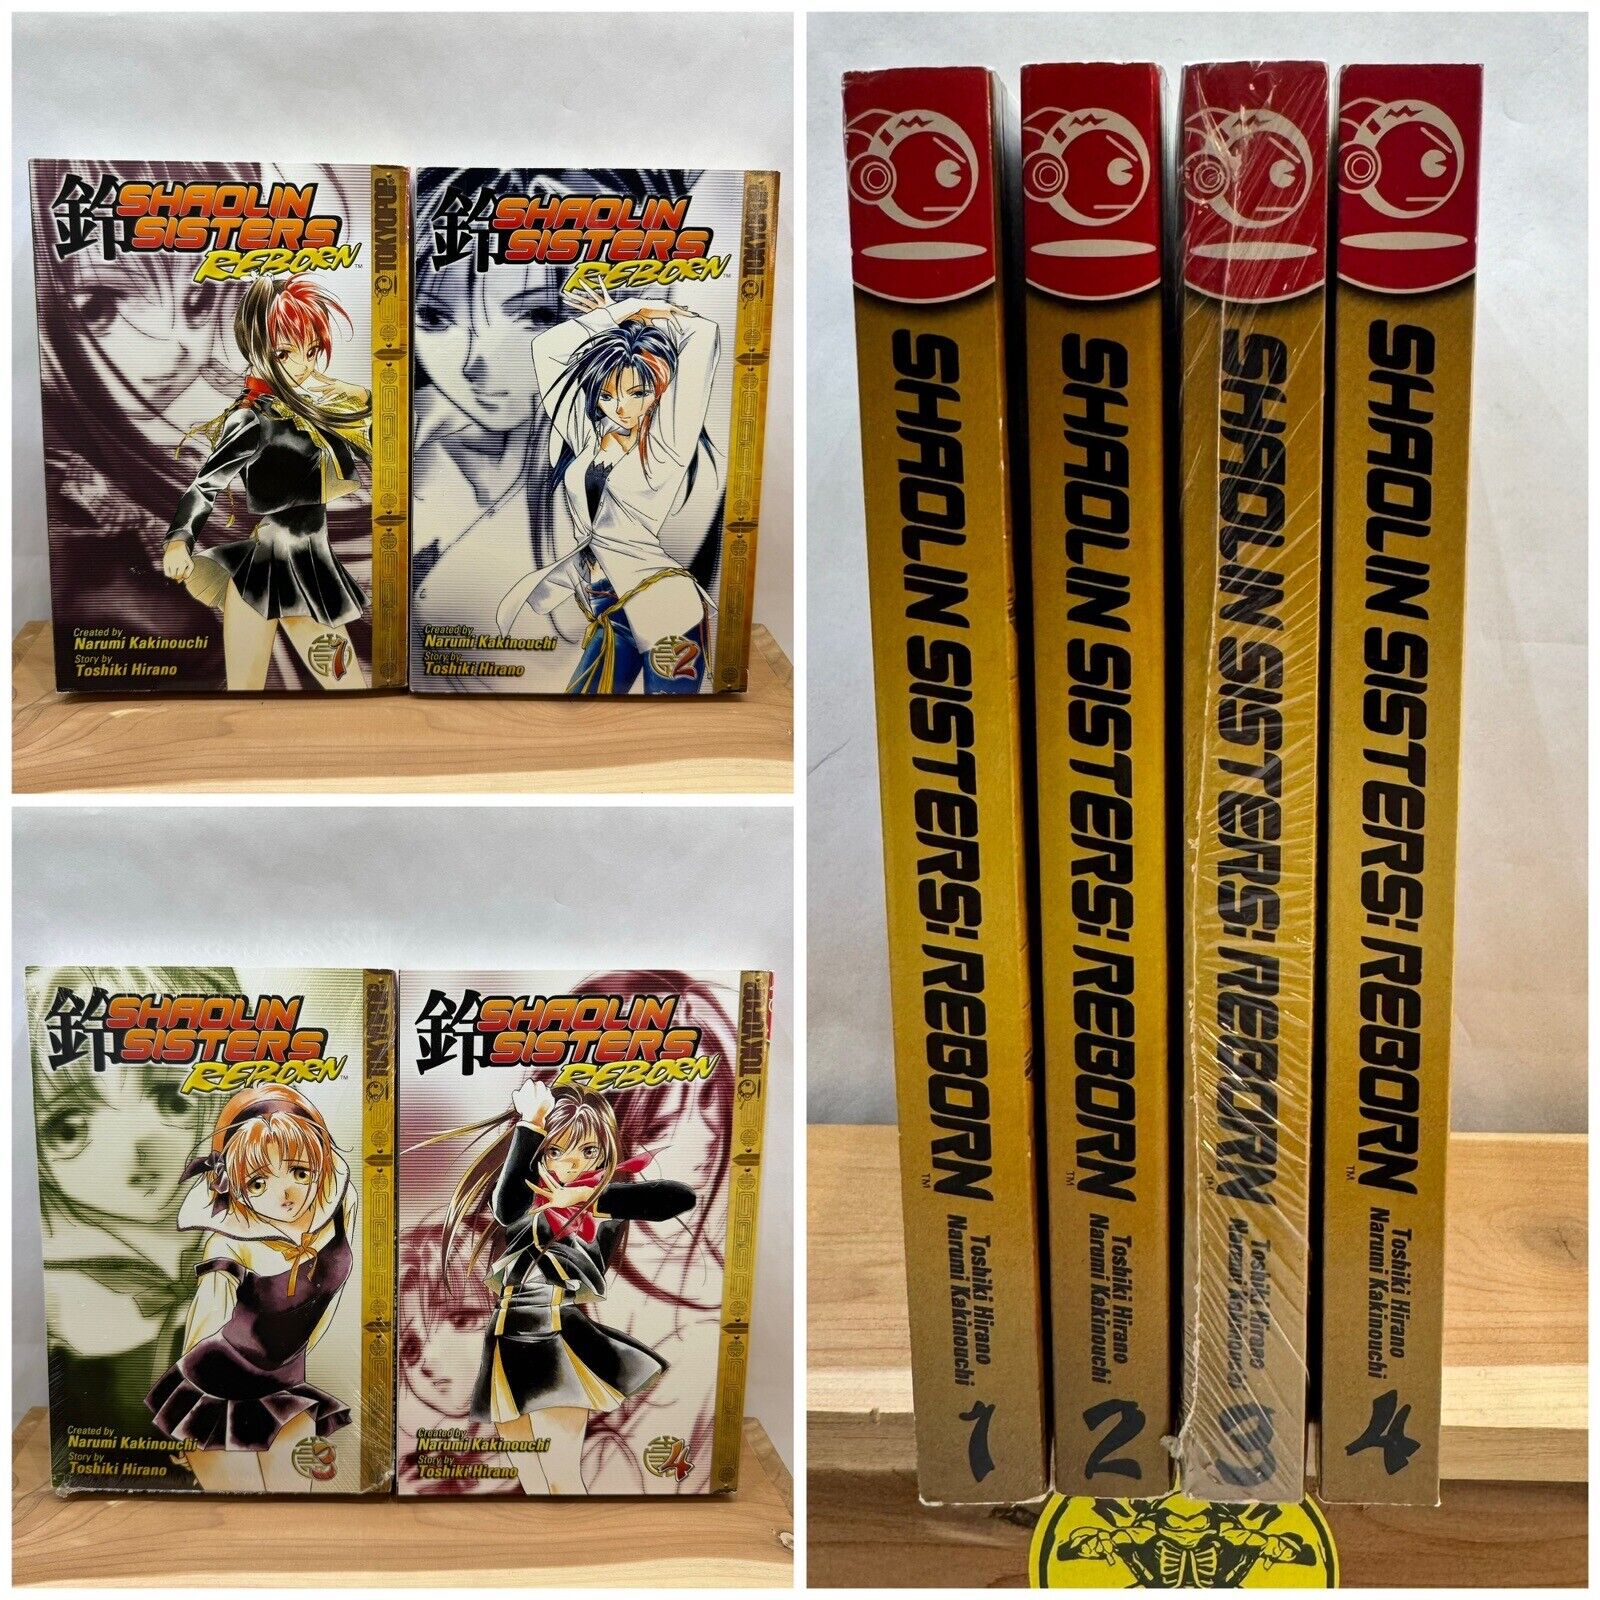 Shaolin Sisters Reborn Volumes 1-4 Manga Lot English Tokyopop Trade Paperback